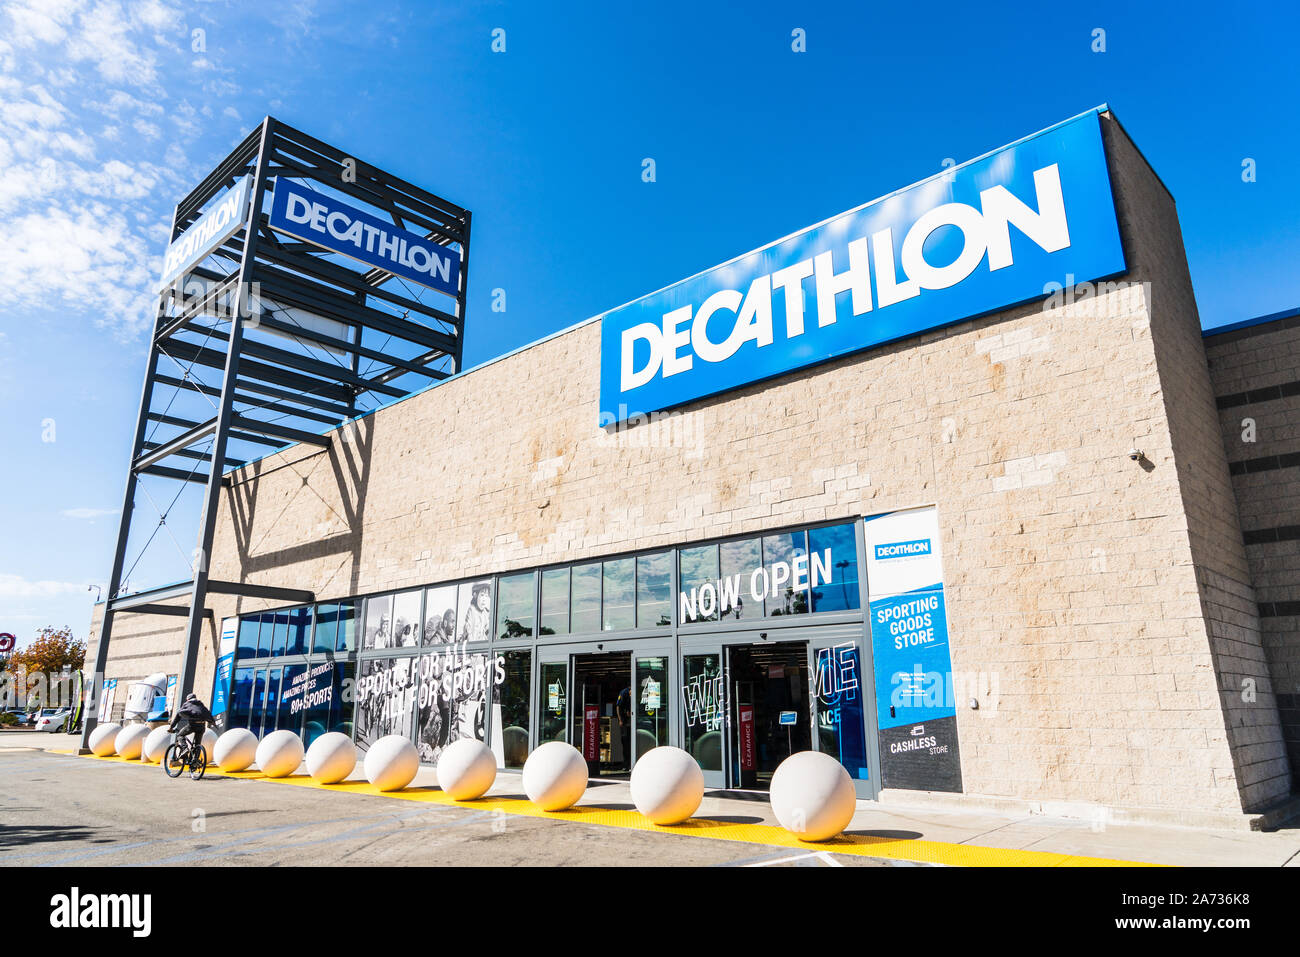 Decathlon Above Entrance Retail Store Decathlon Stock Photo 1455606452